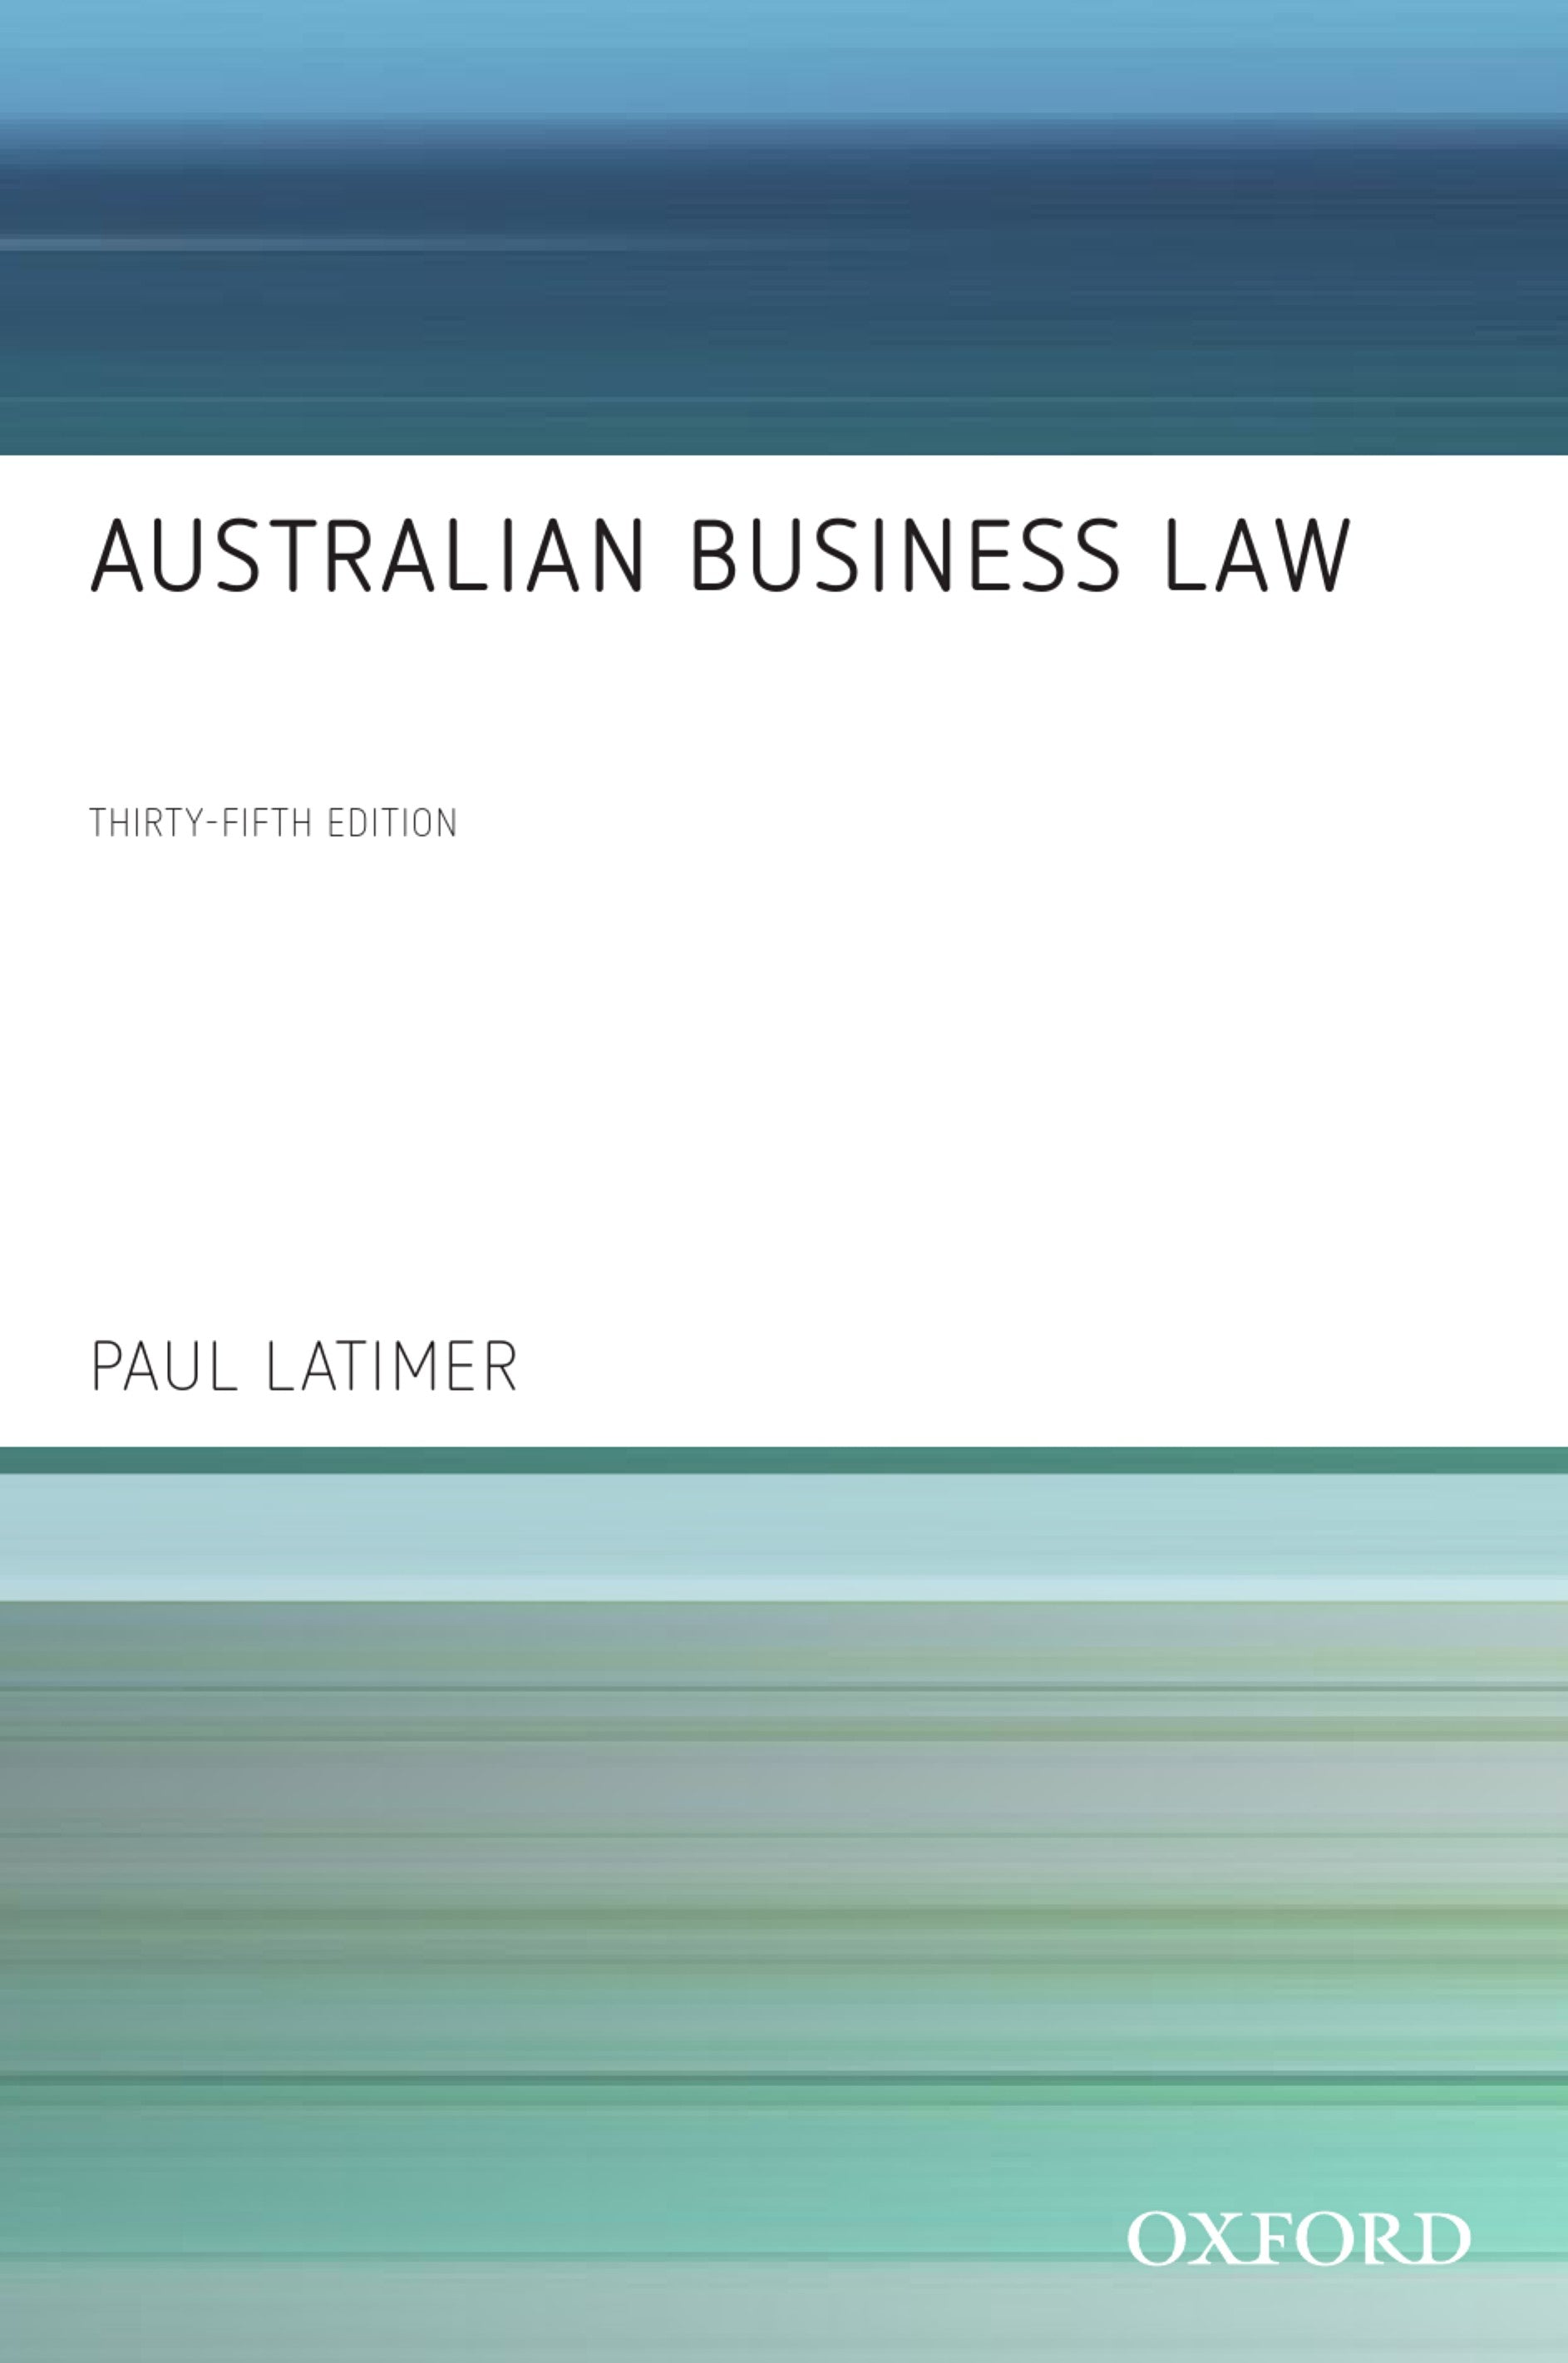 Australian Business Law, Latimer